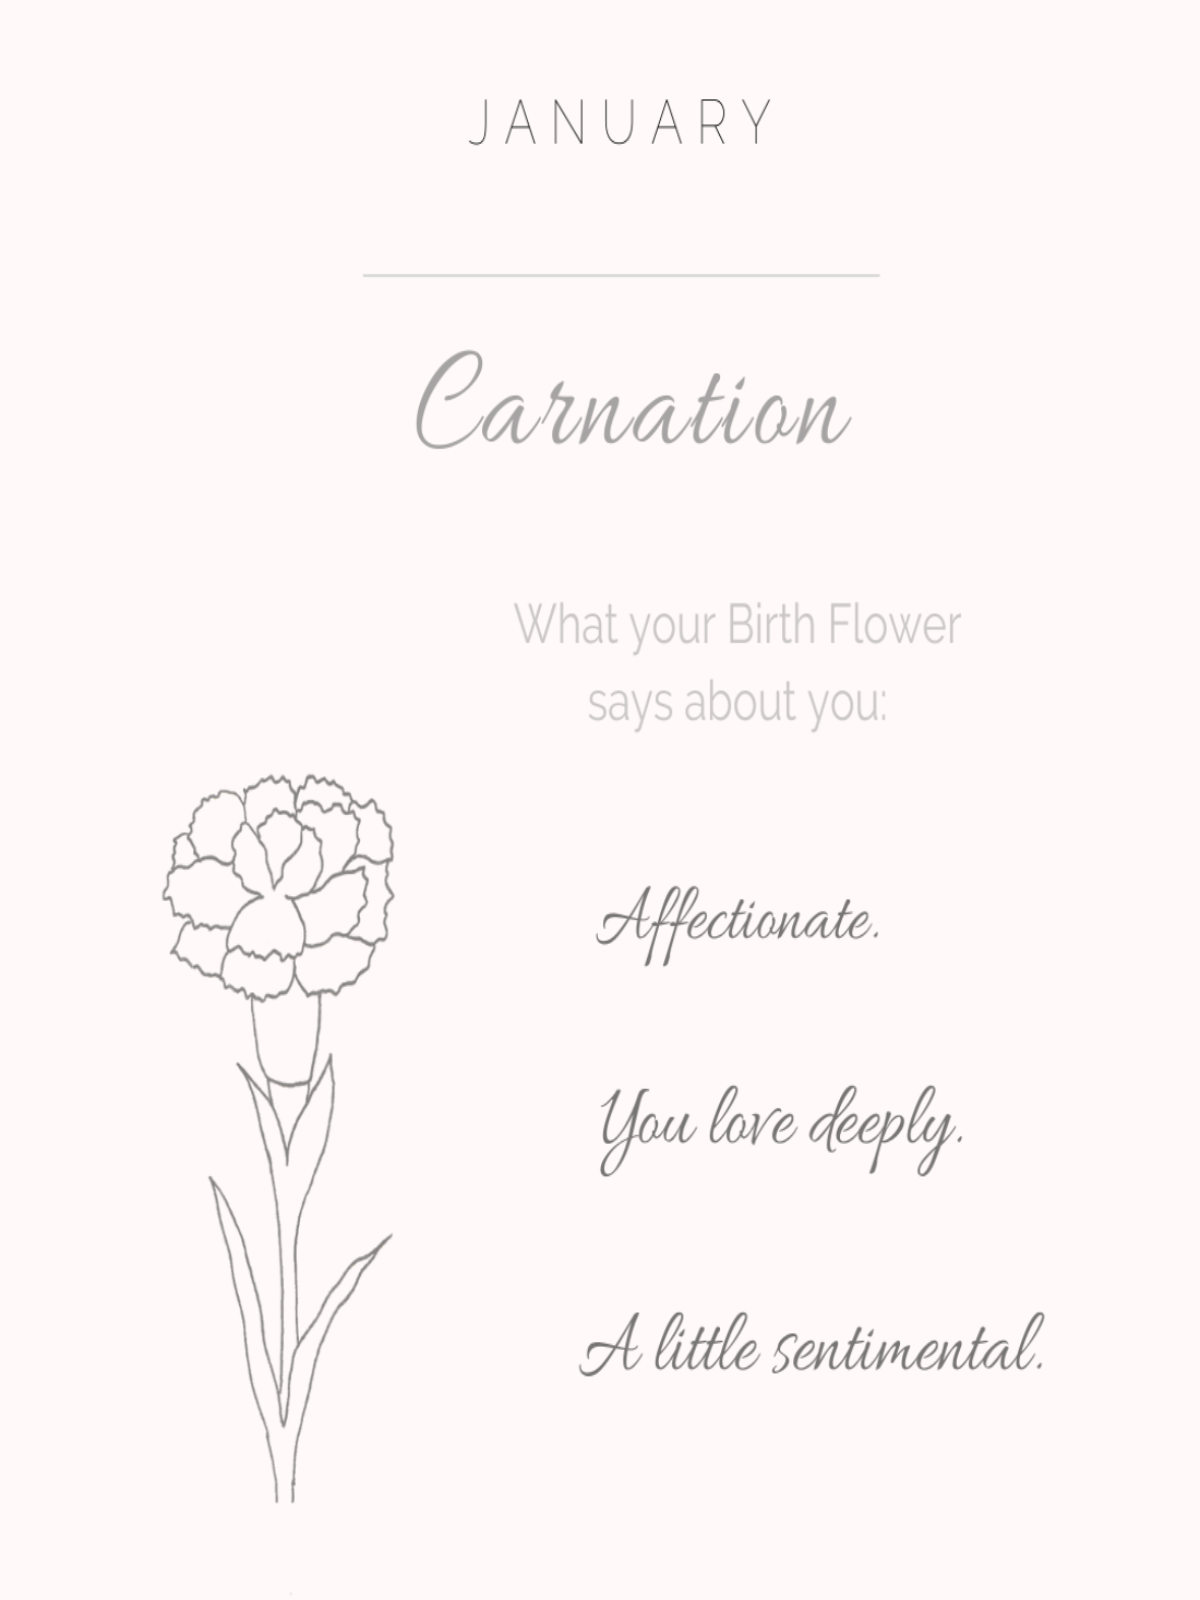 Carnation - January Birthflower